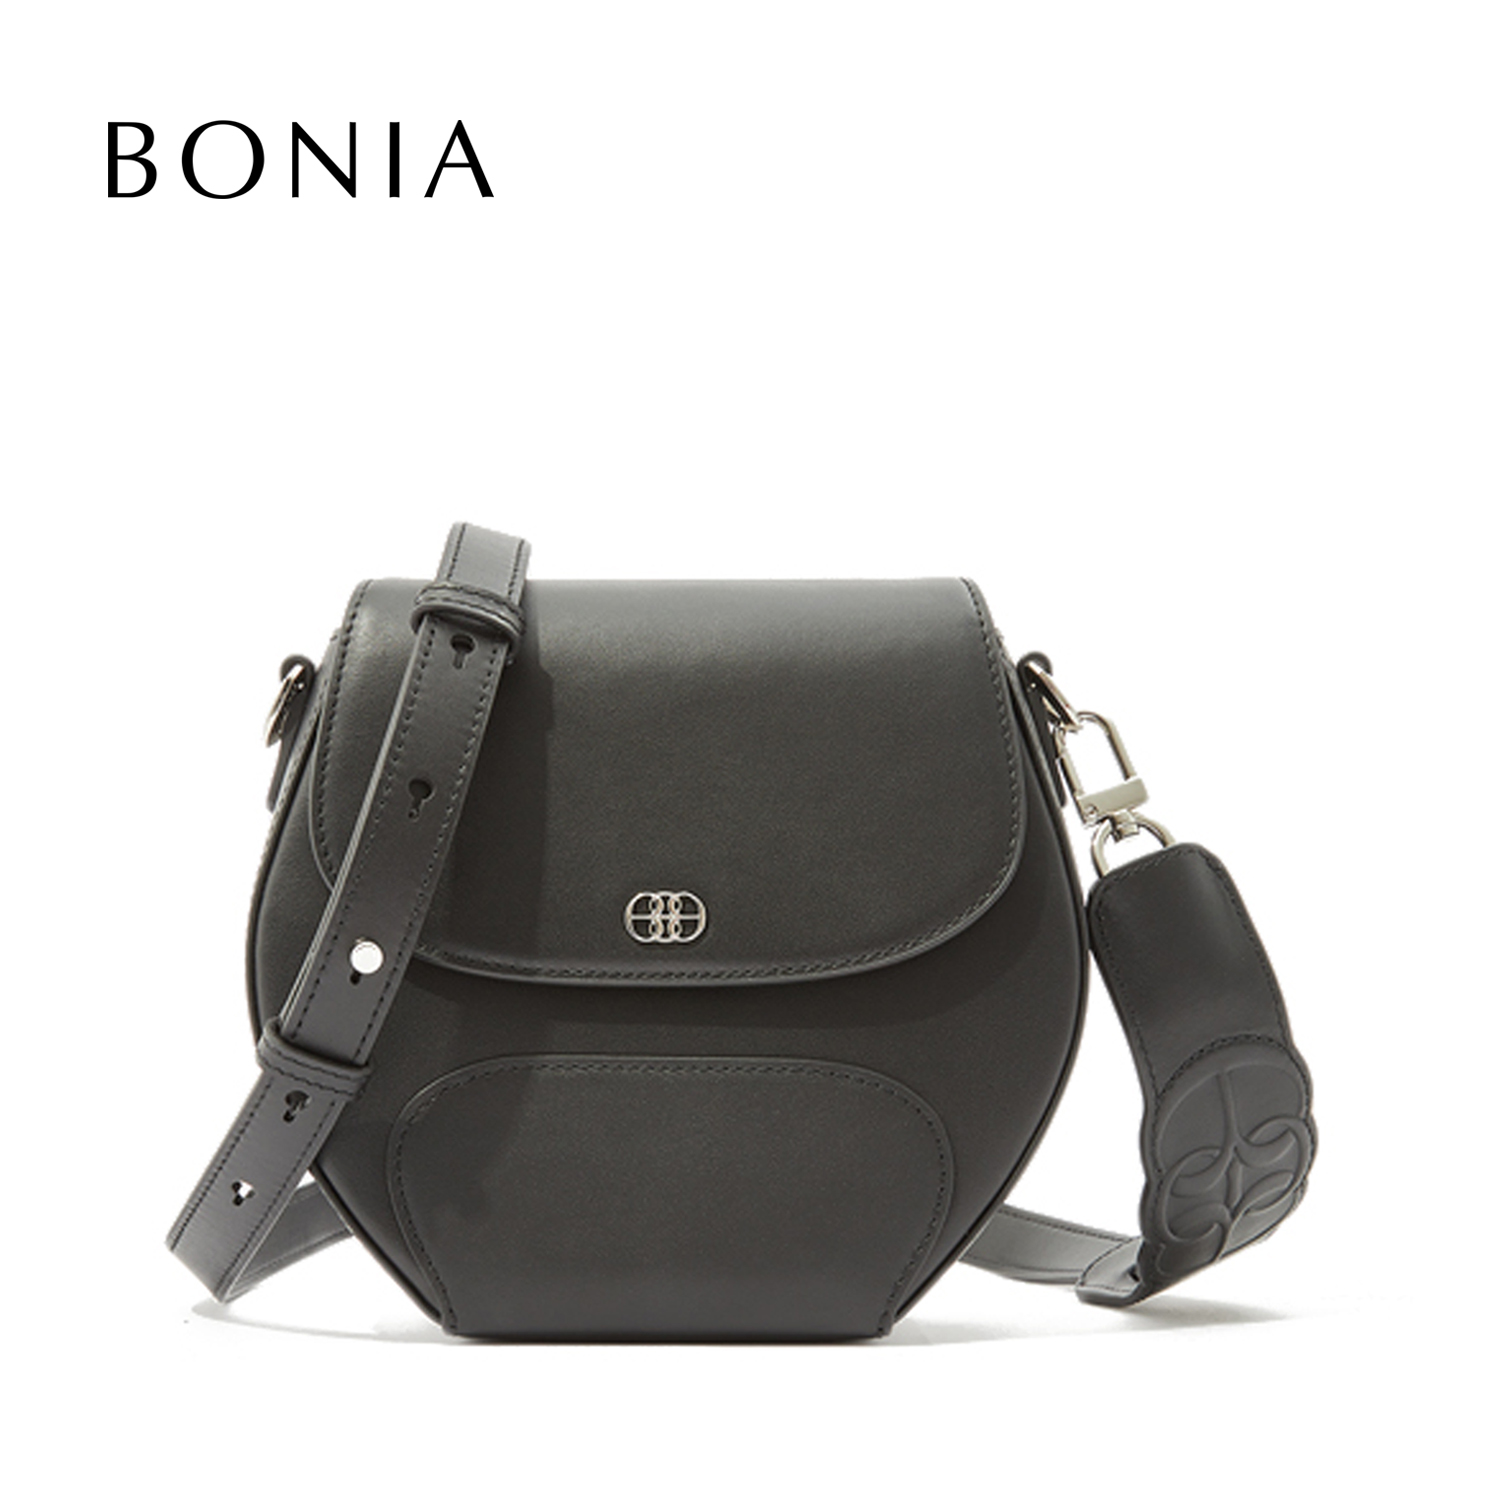 BONIA - The Bolster Ranger Crossbody Bag stacks up great against any  competition. Shop now:  crossbody-bag #BONIA #LaLuna